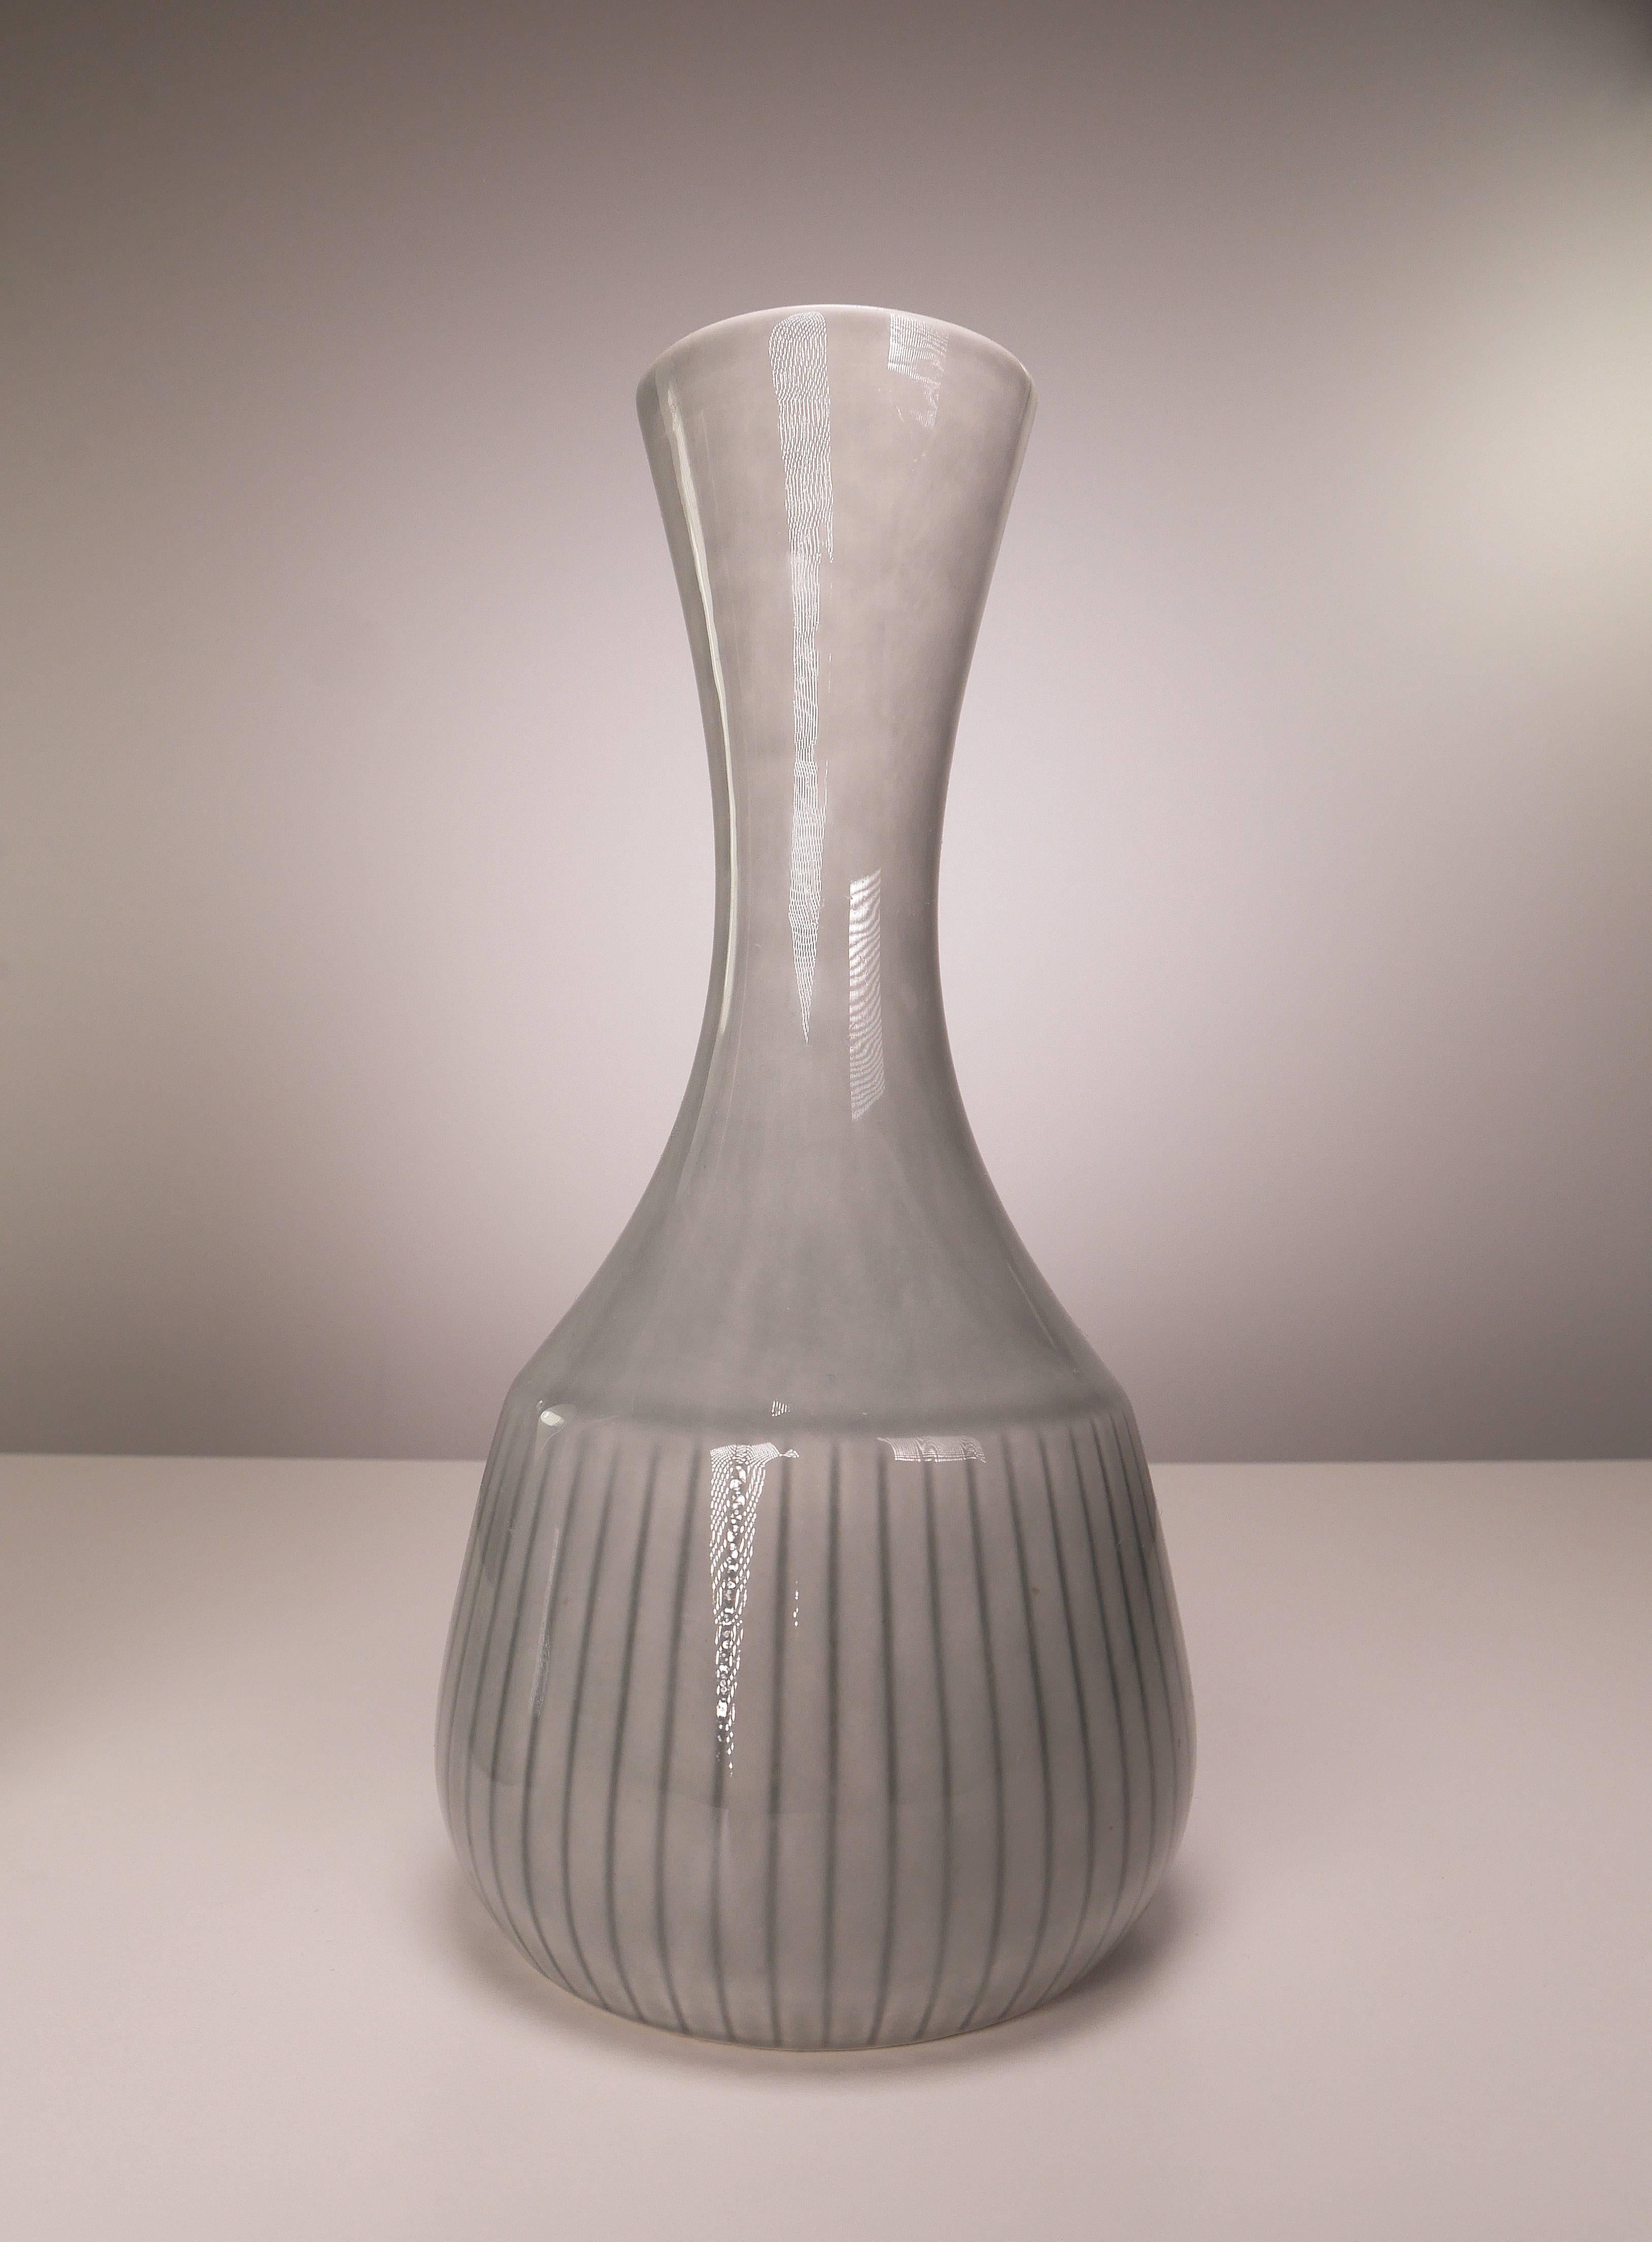 Rare set of two Scandinavian modern smooth porcelain vases by acclaimed designer Gunnar Nylund for Rörstrand and Nordiska Kompaniet in Sweden. Light gray glaze with dark gray stripes on the belly. Stamped Rörstrand Sweden and NK (Nordiska Kompaniet)